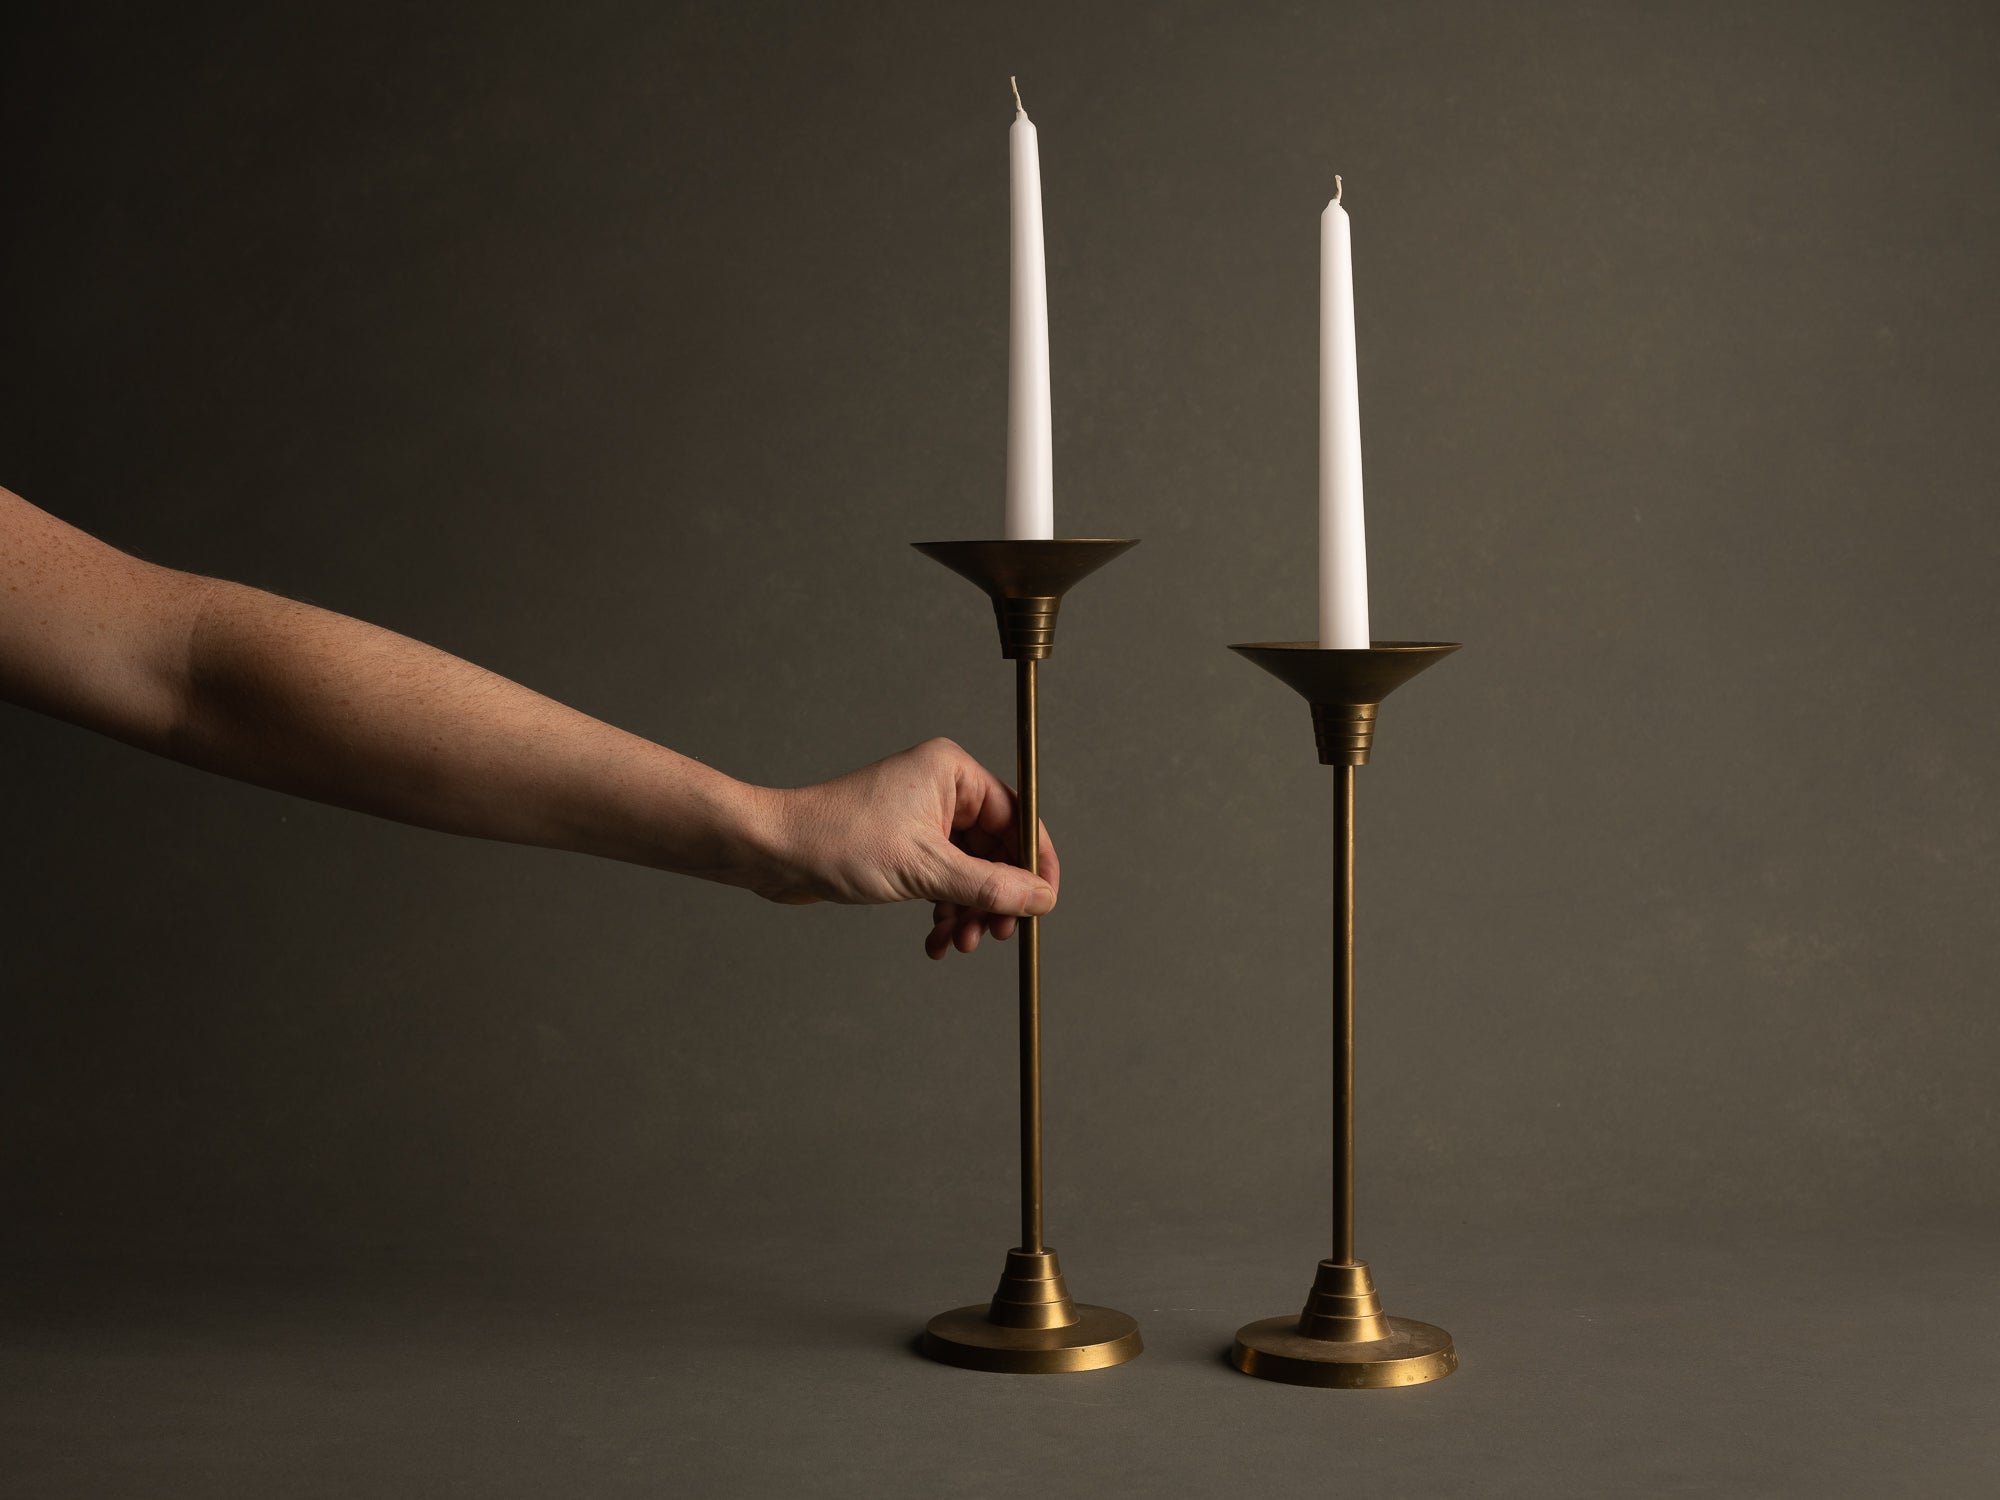 Paire de flambeaux néoclassiques modernistes, France (vers 1930)..Pair of neoclassical modernist Candle holders, France (circa 1930)